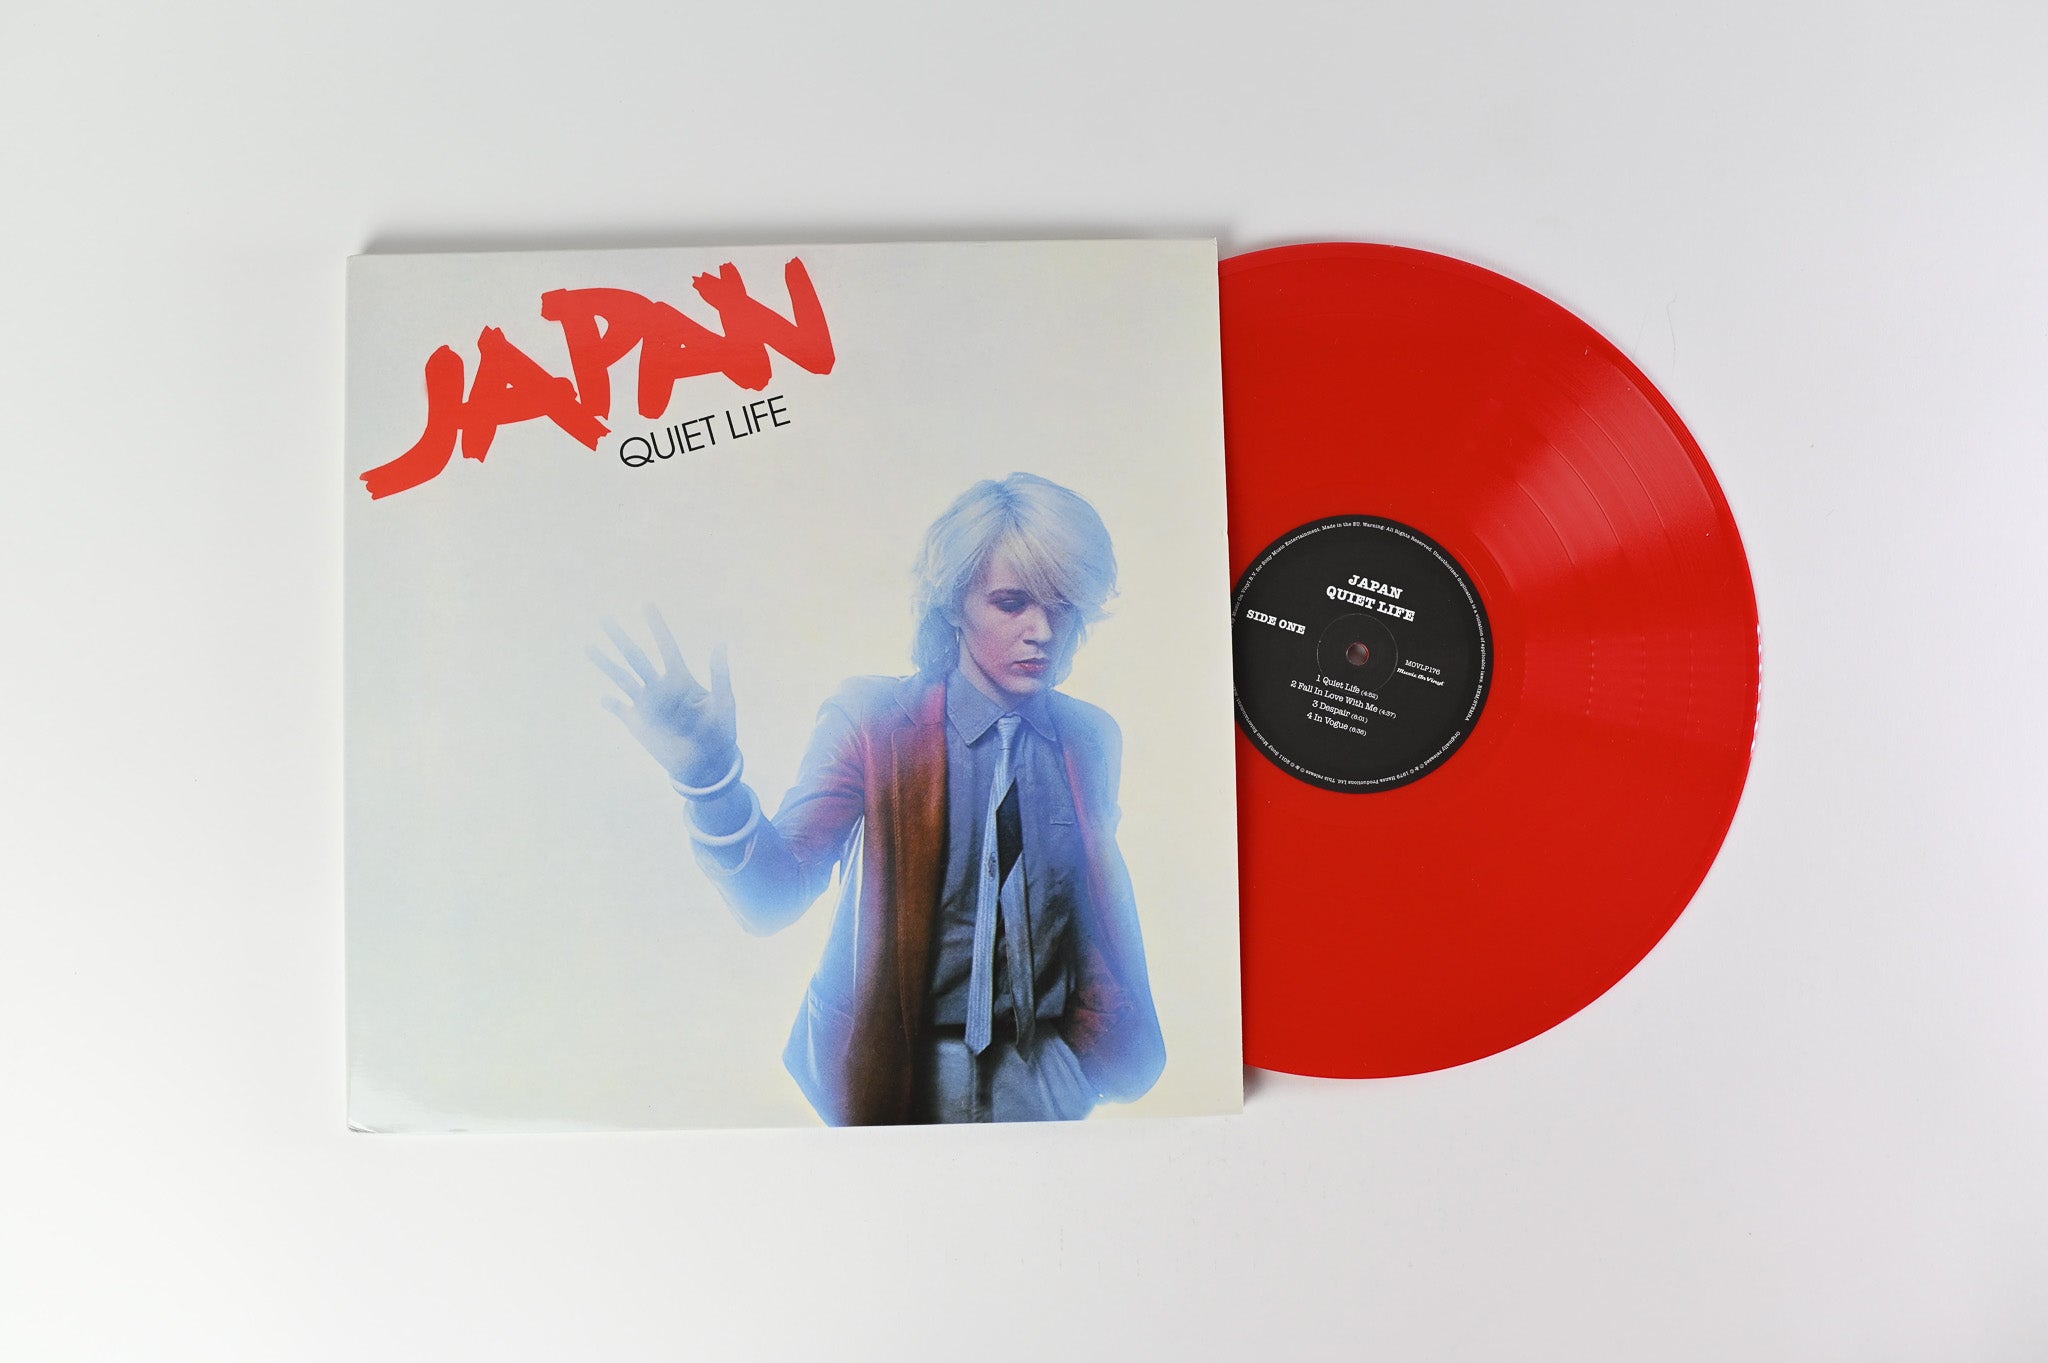 Japan - Quiet Life on Music On Vinyl Ltd Red Vinyl Reissue